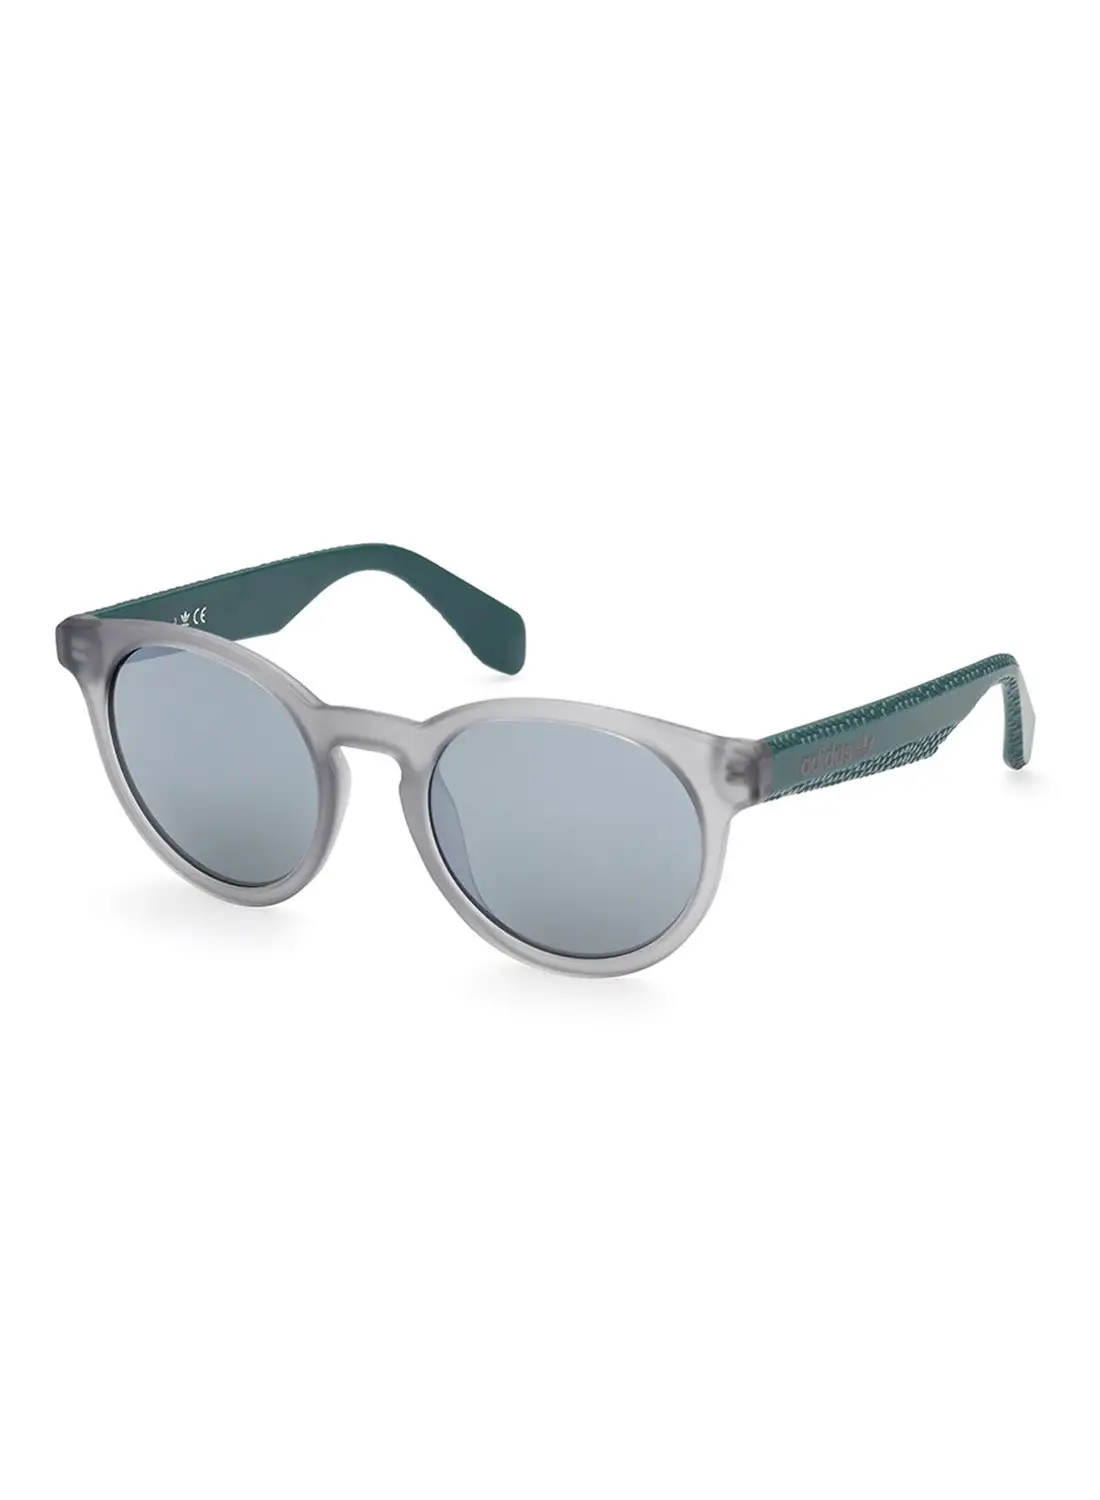 Adidas Unisex UV Protection Round Shape Sunglasses - OR005620Q52 - Lens Size: 52 Mm